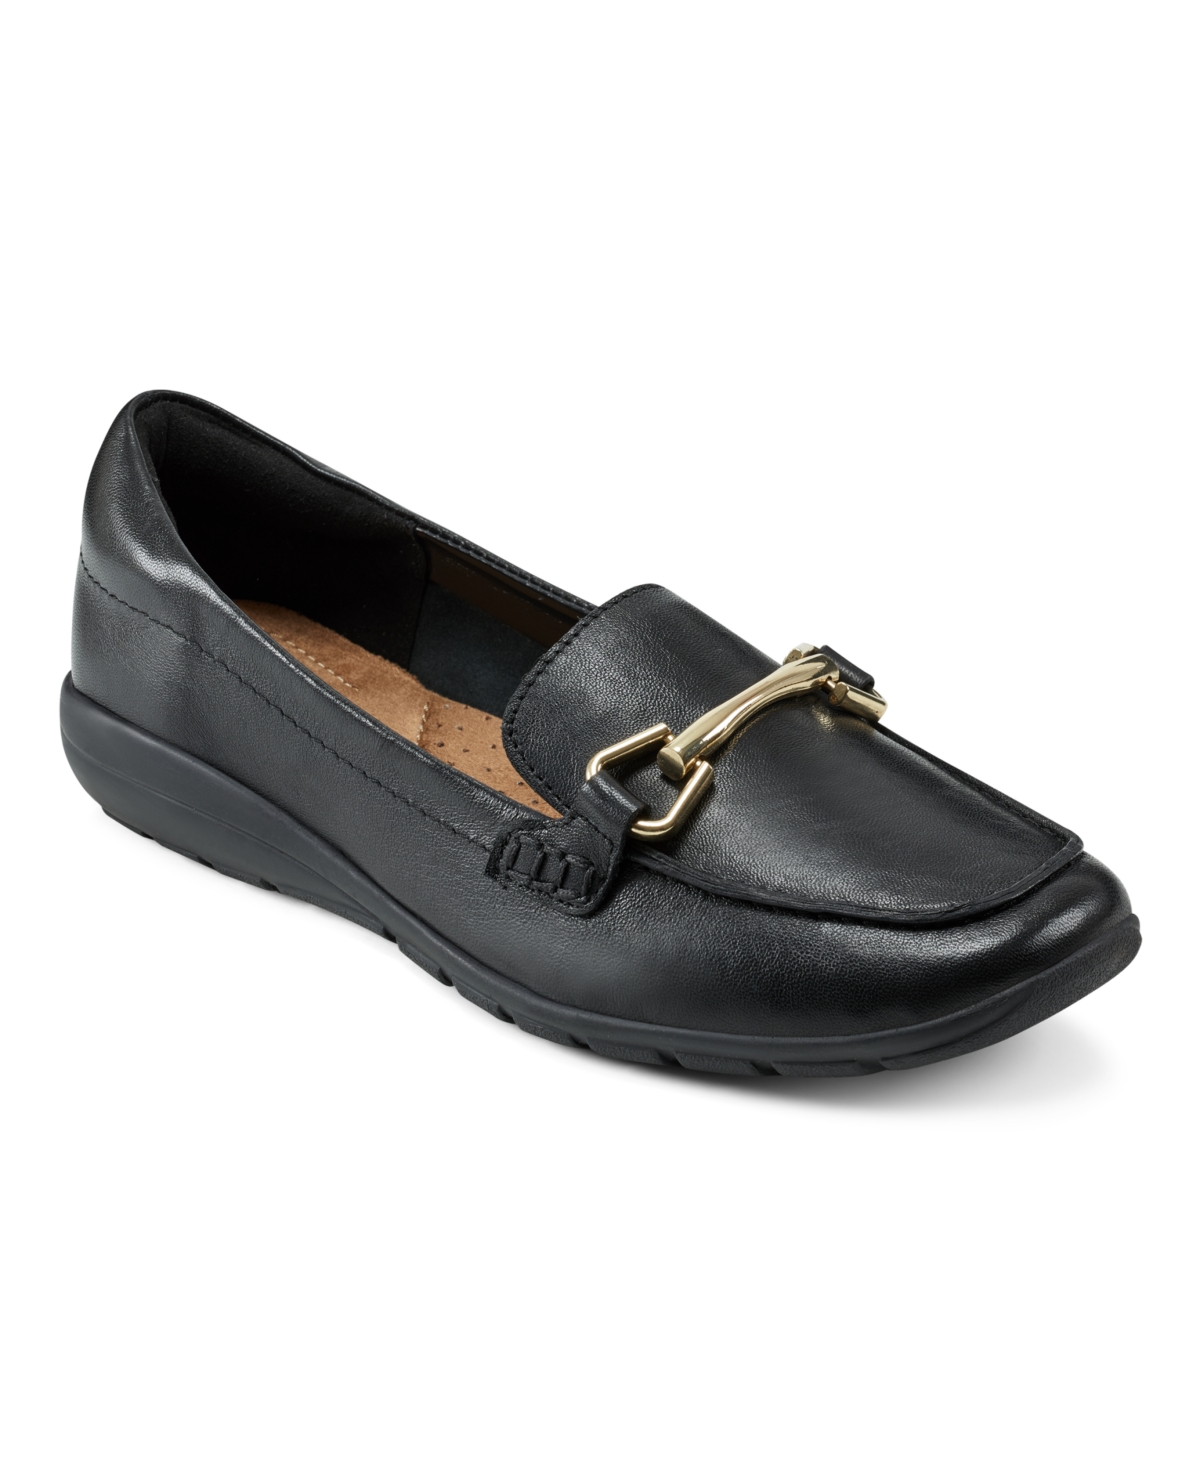 Women's Eflex Amalie Square Toe Casual Slip-On Flat Loafers - Navy Leather